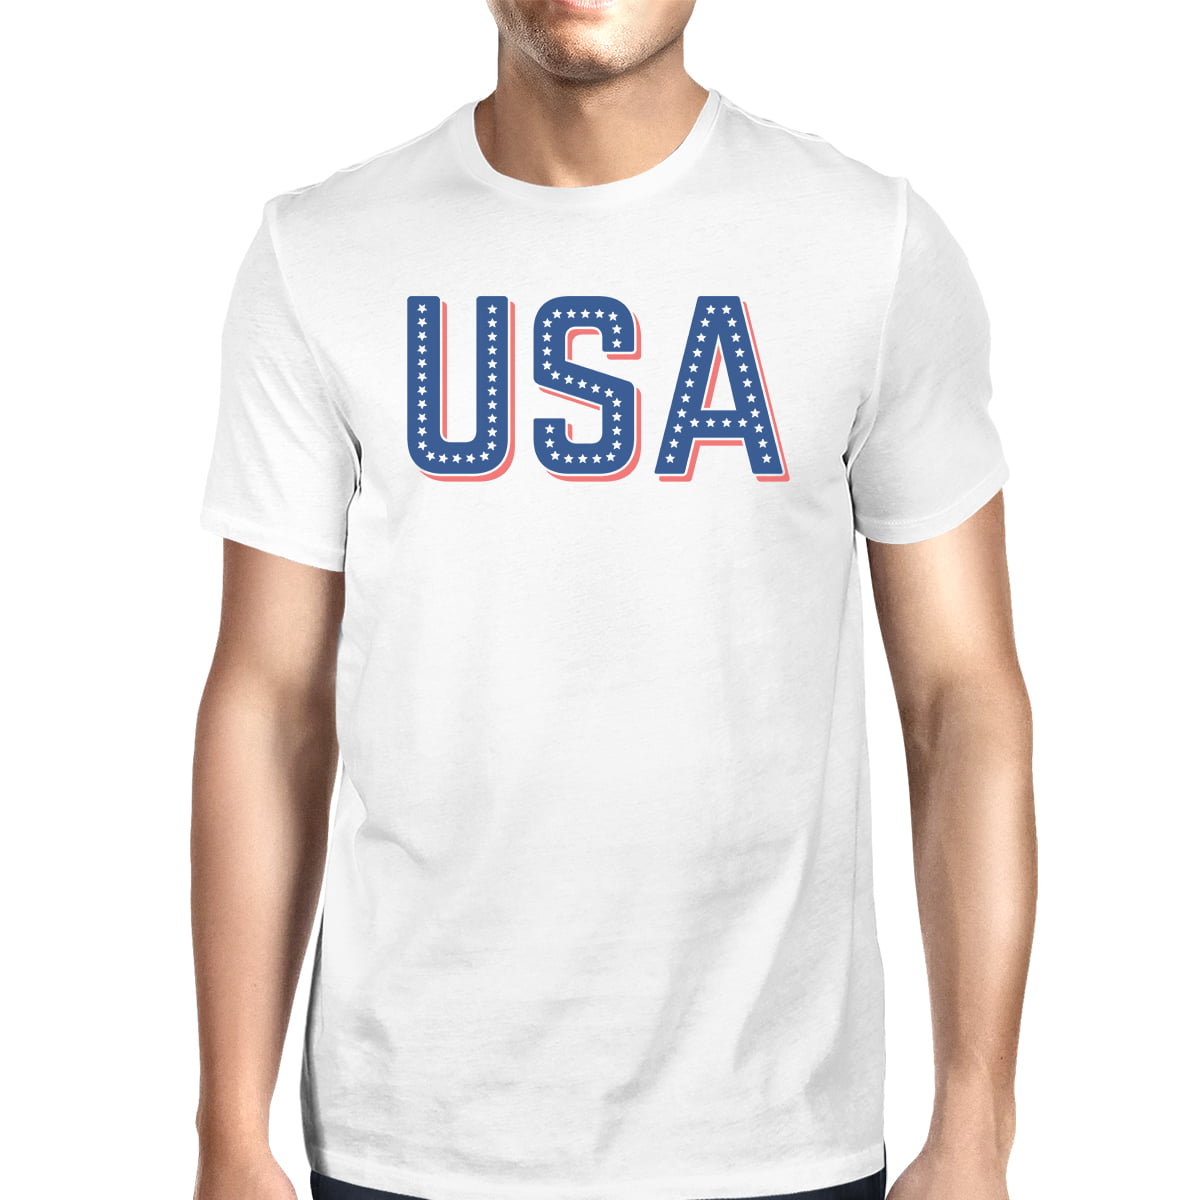 Reason Mens Usa Stars Graphic T-Shirt 